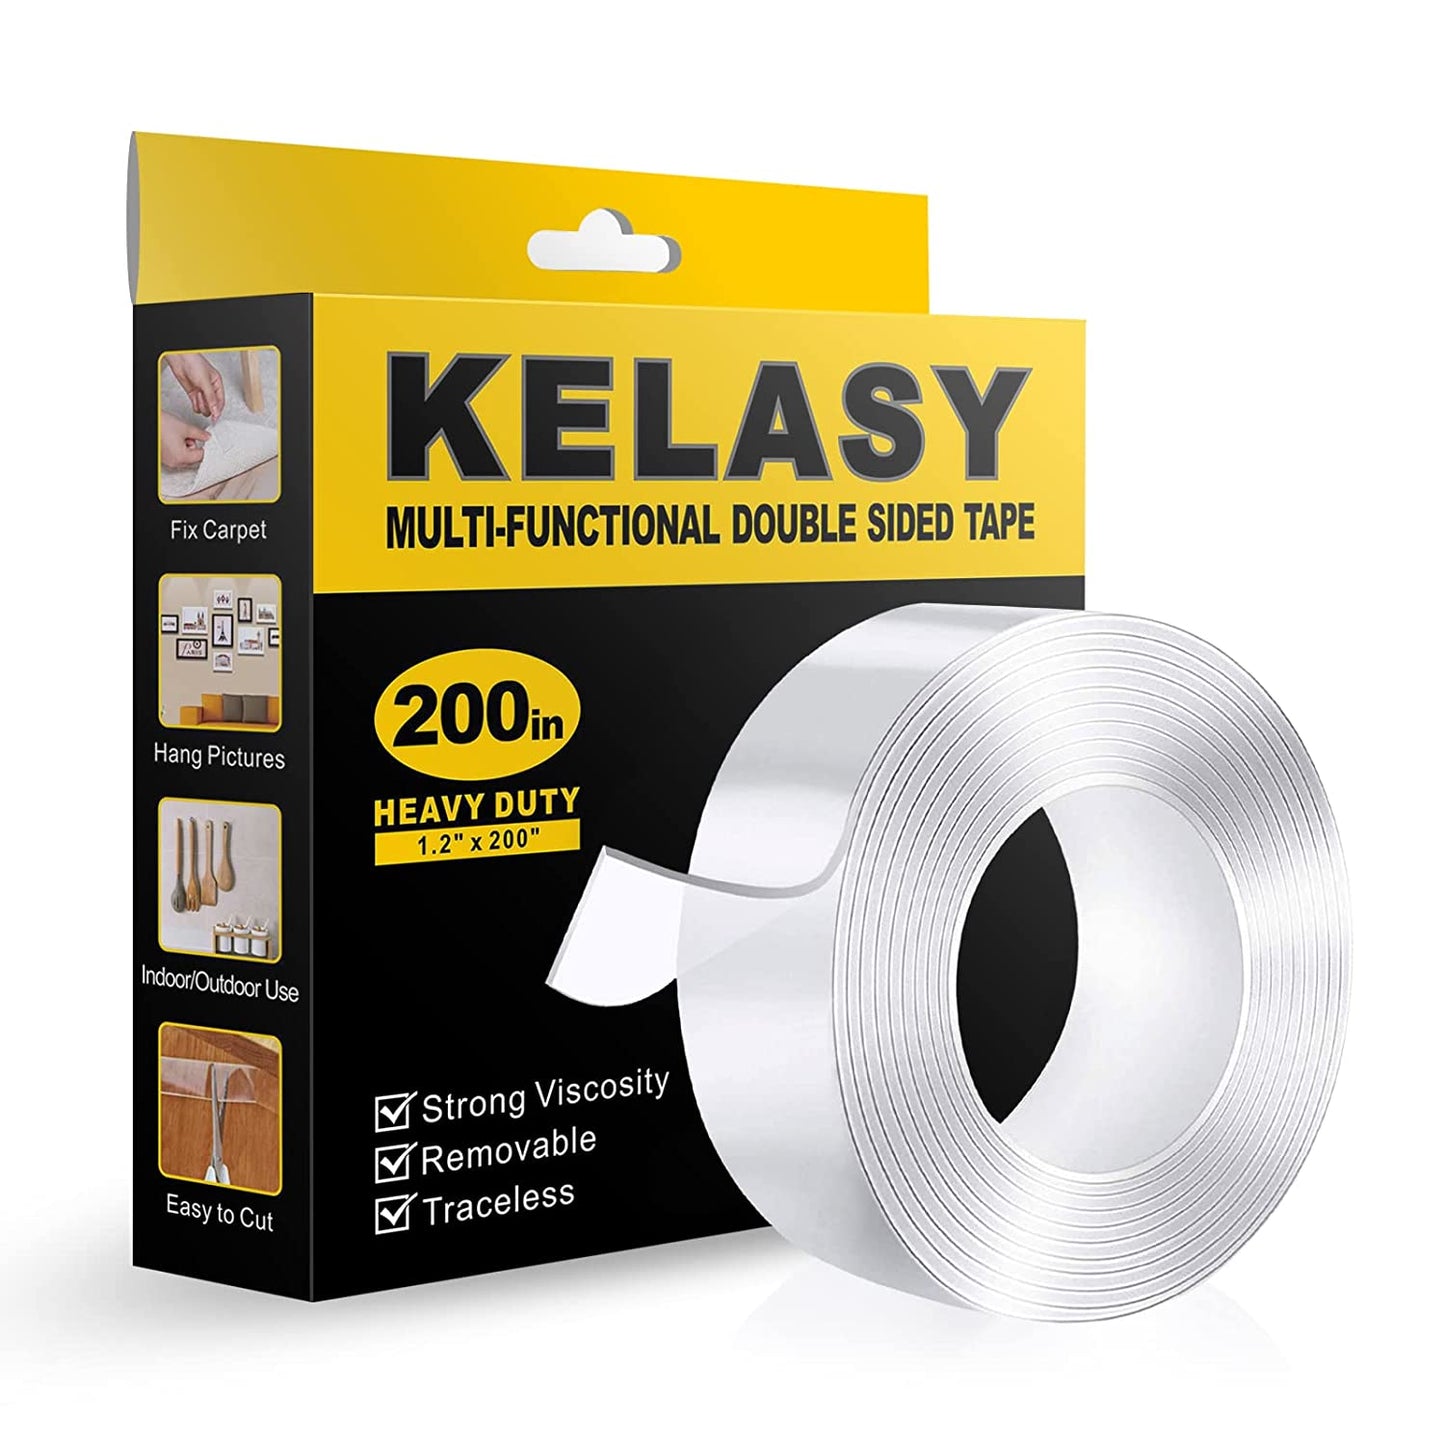 KELASY Double Sided Tape Heavy Duty,1.2 x 200 Mounting Tape